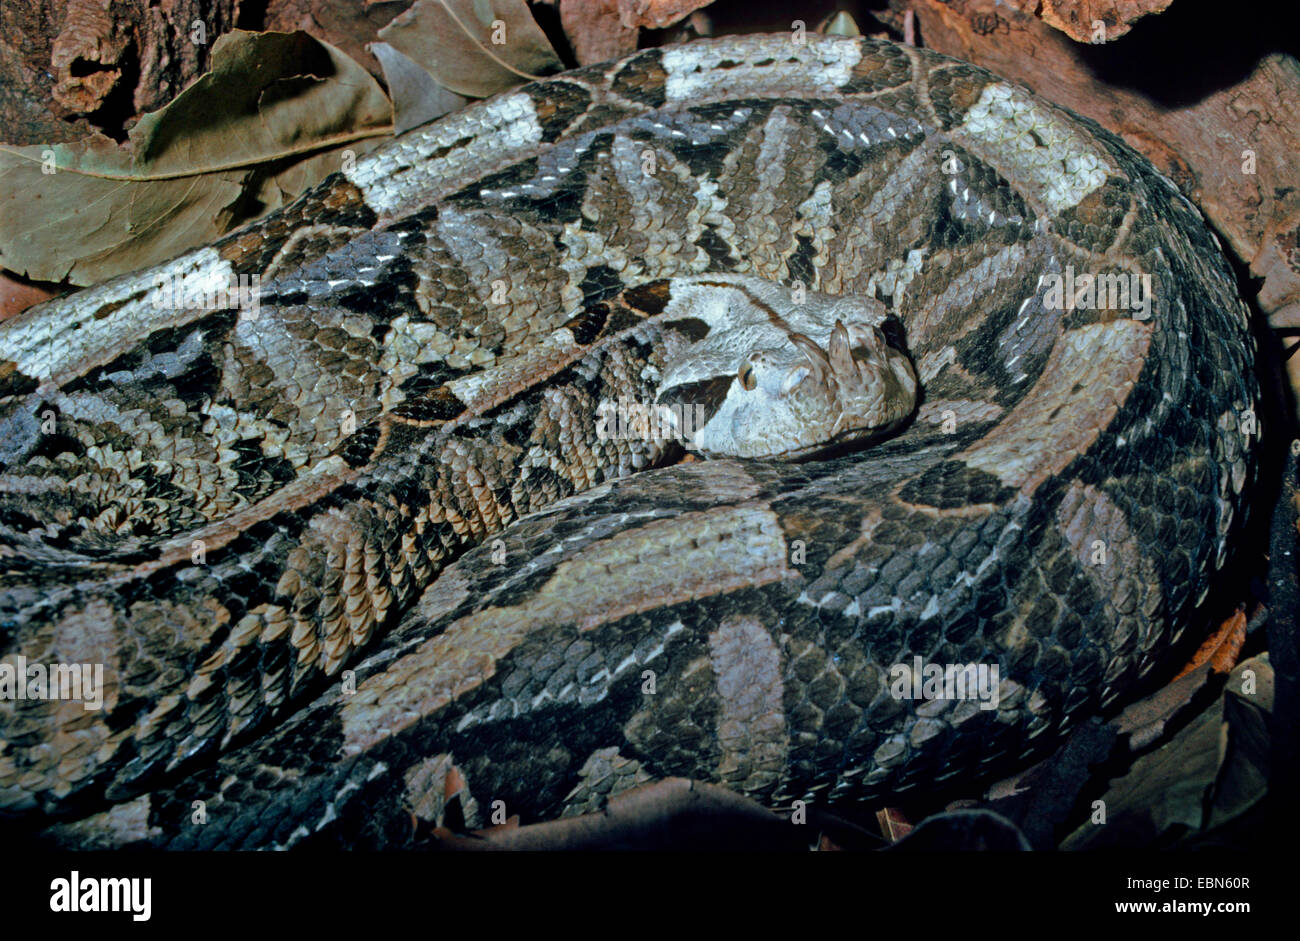 Gaboon viper (Bitis gabonica rhinoceros, Bitis rinoceronte), giacente a terra iscritti Foto Stock